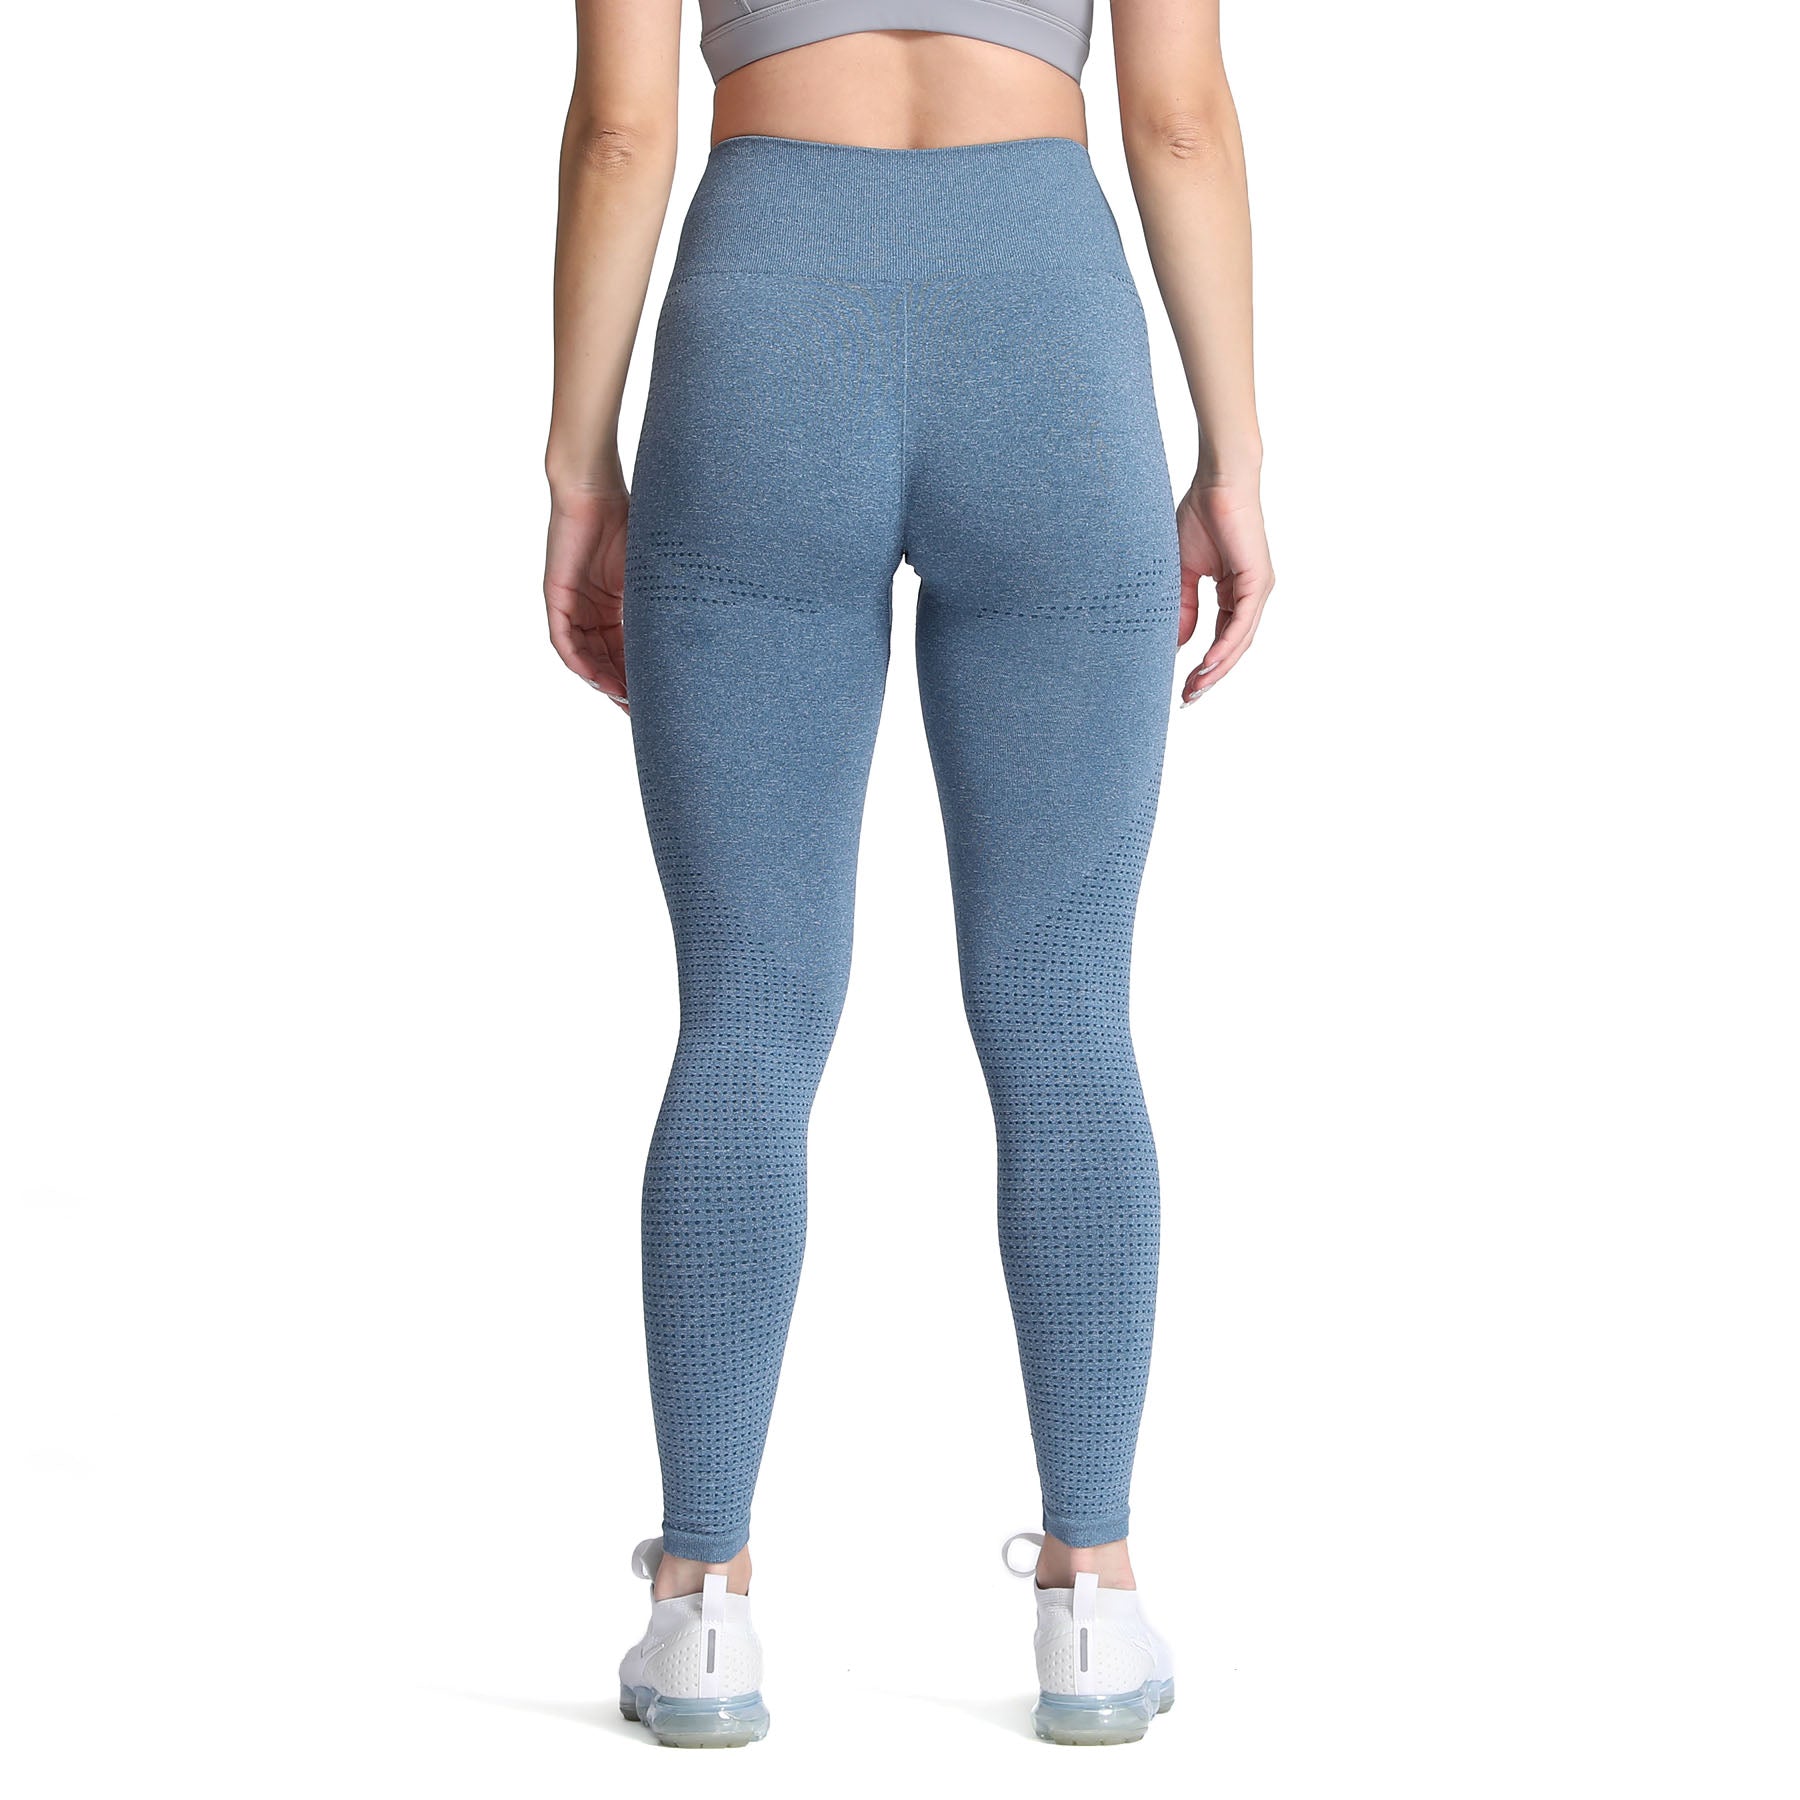  Aoxjox Women's High Waist Workout Gym Vital Seamless Leggings  Yoga Pants (Cherry Brown Marl, X-Small) : Sports & Outdoors